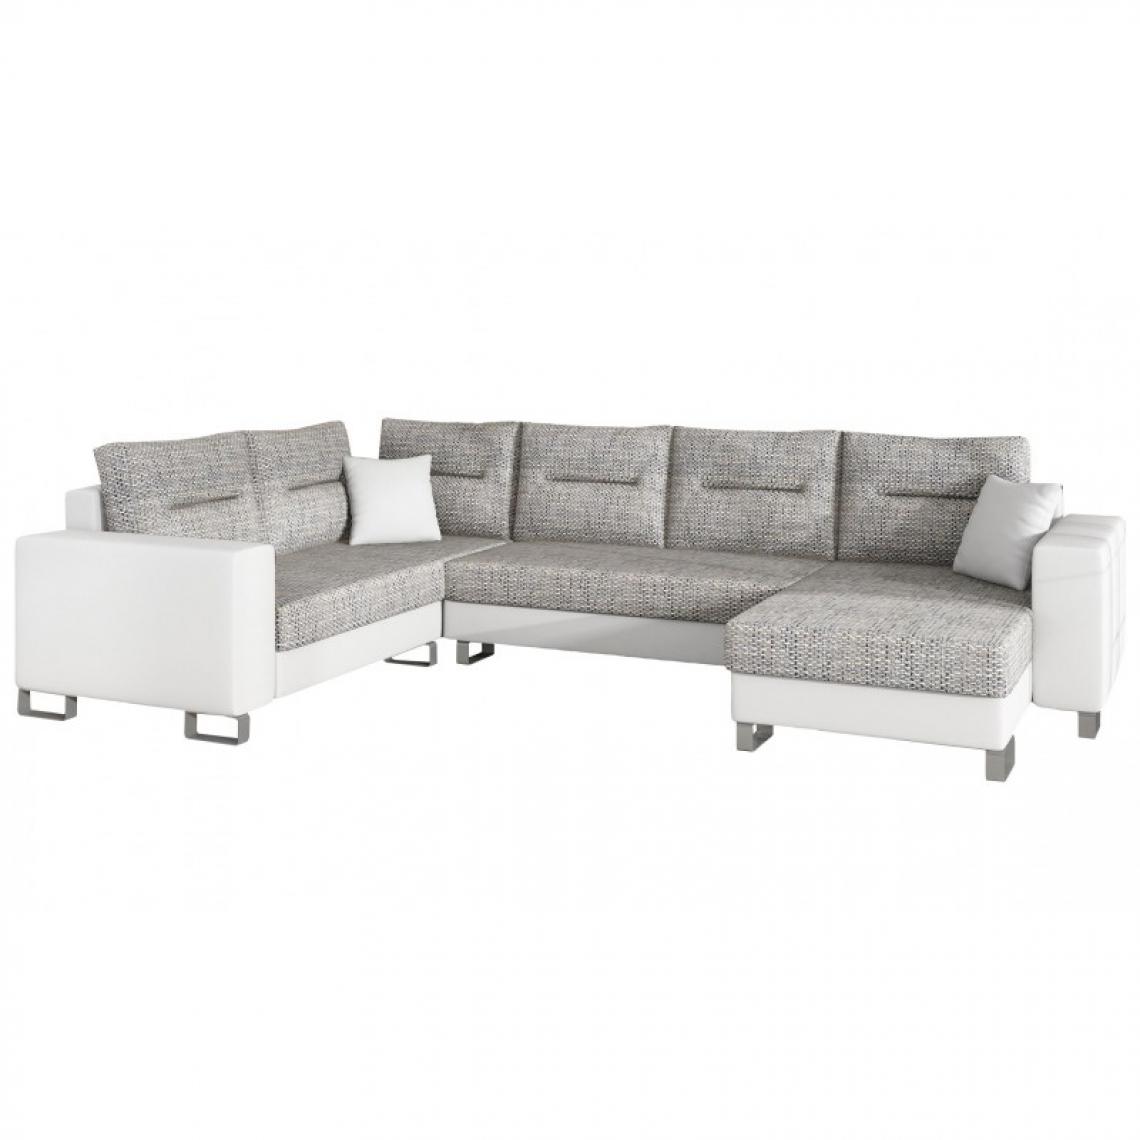 Meubler Design - Canapé d'angle Panoramique en U Convertible Dorado - Angle du canapé - Droit - Tissu gris clair/ PU blanc - Canapés